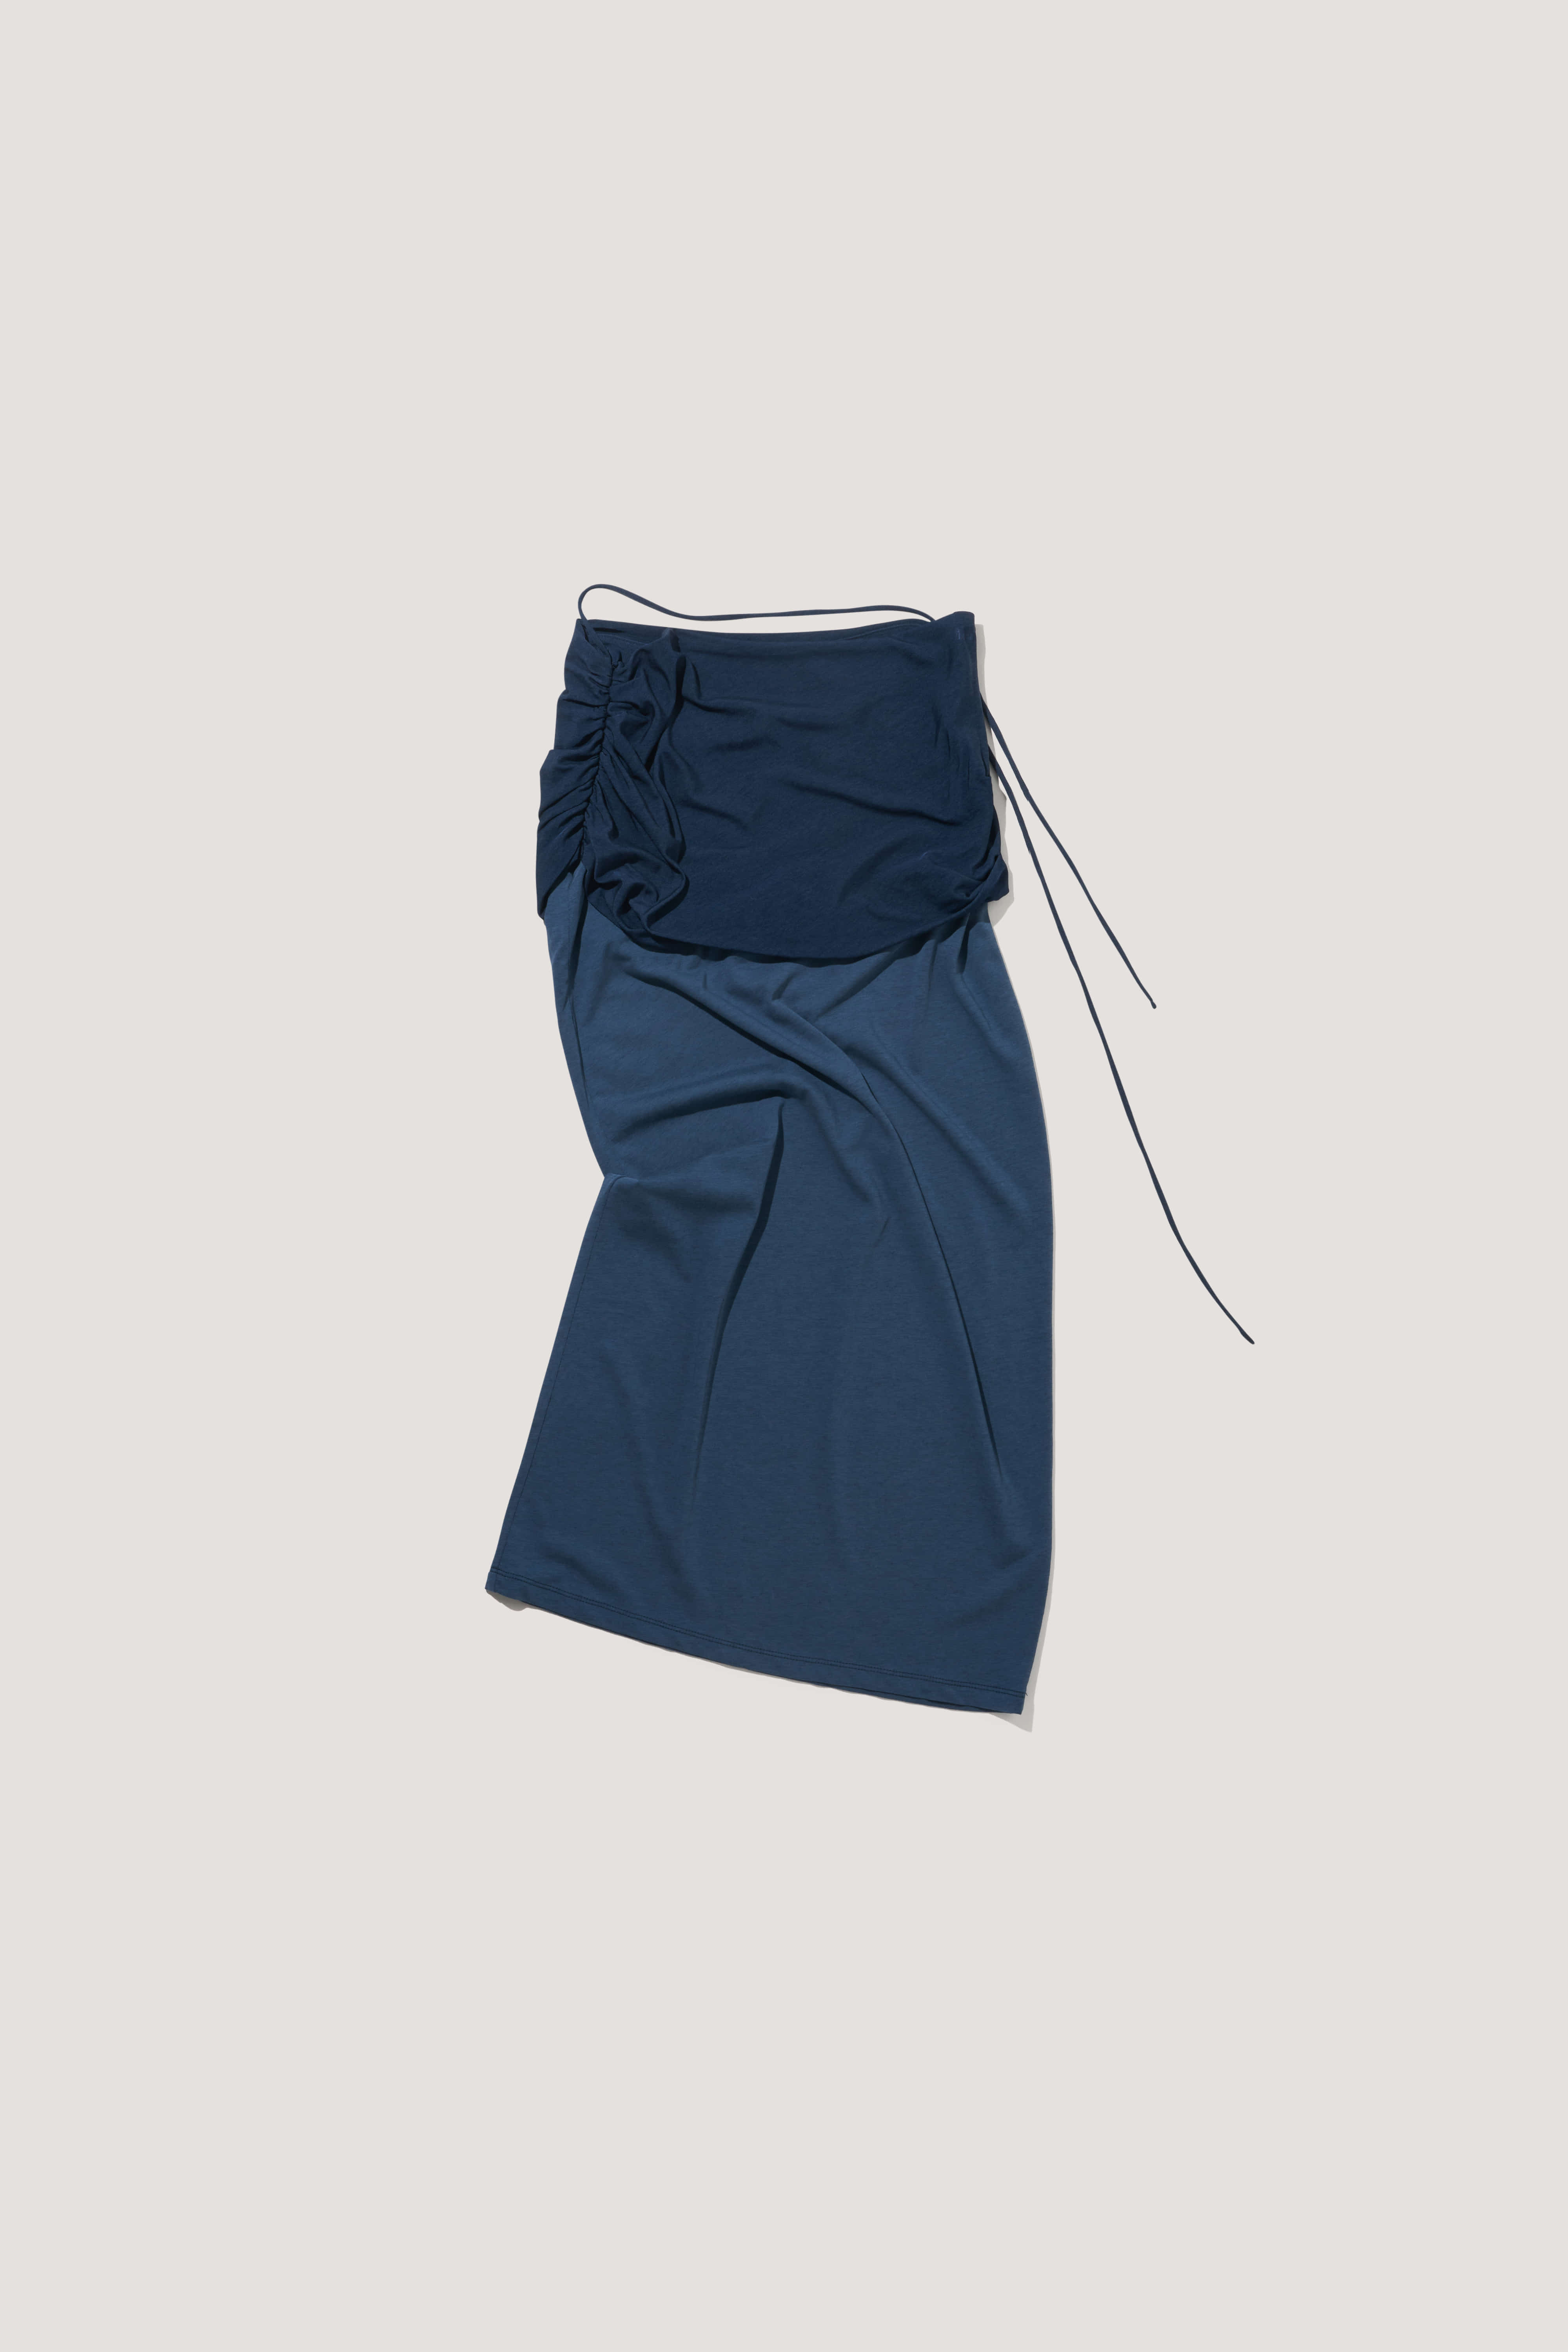 Double-Layered Shirring Skirt [cobalt blue]